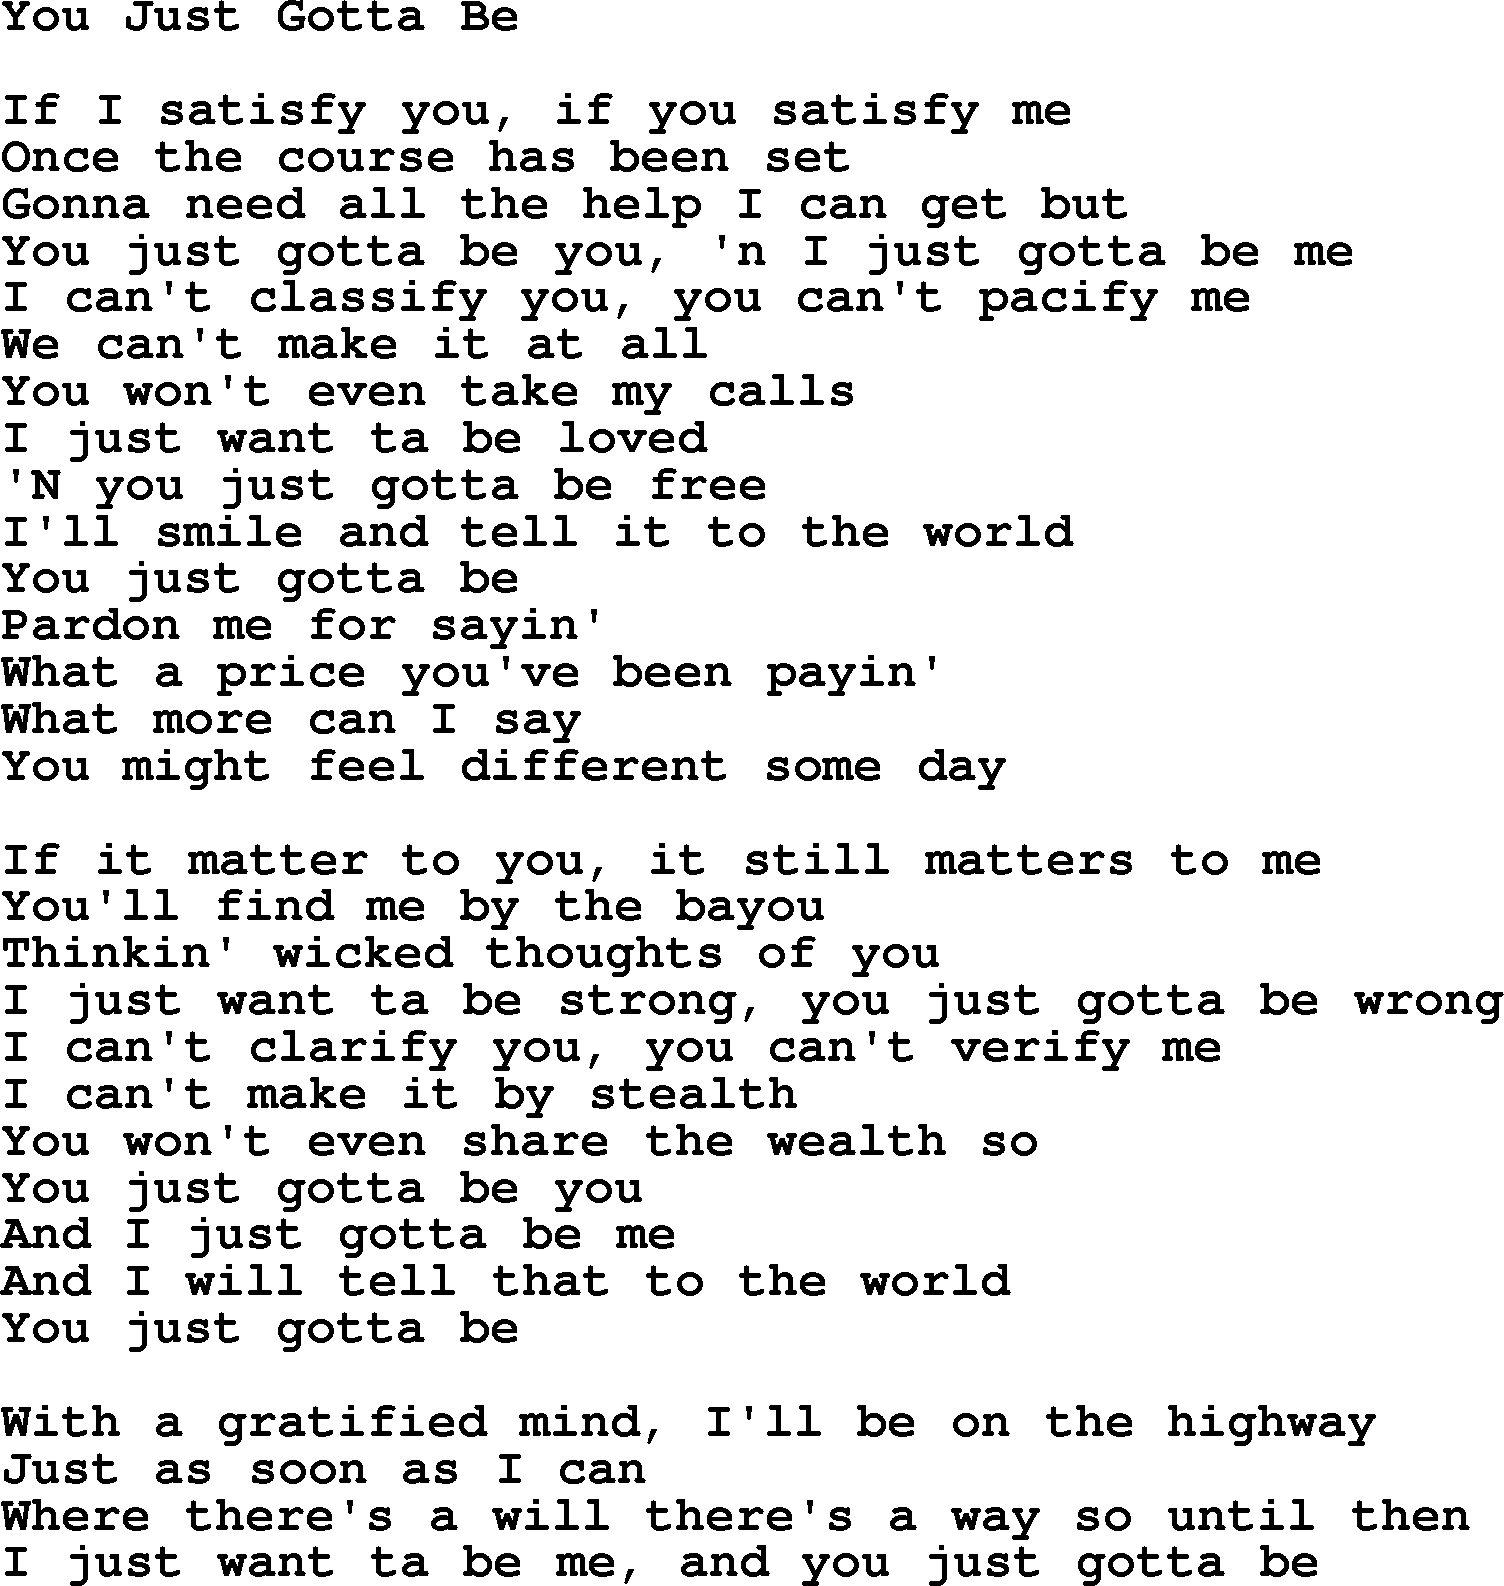 Gordon Lightfoot song You Just Gotta Be, lyrics